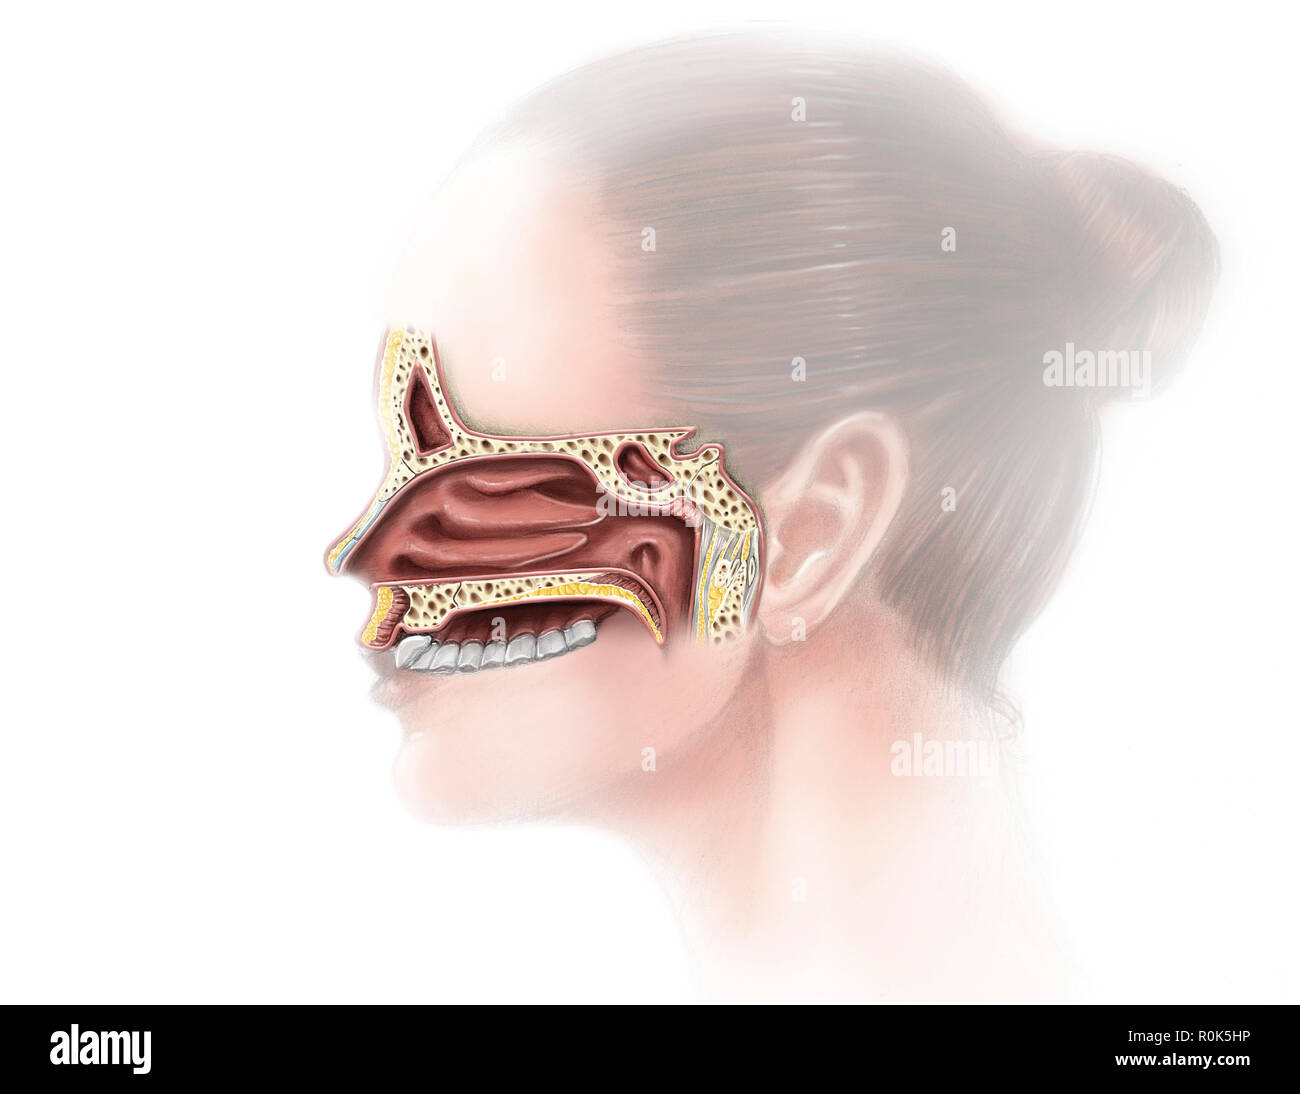 Digital illustration of nose and nasal sinus anatomy (no labels) Stock Photo